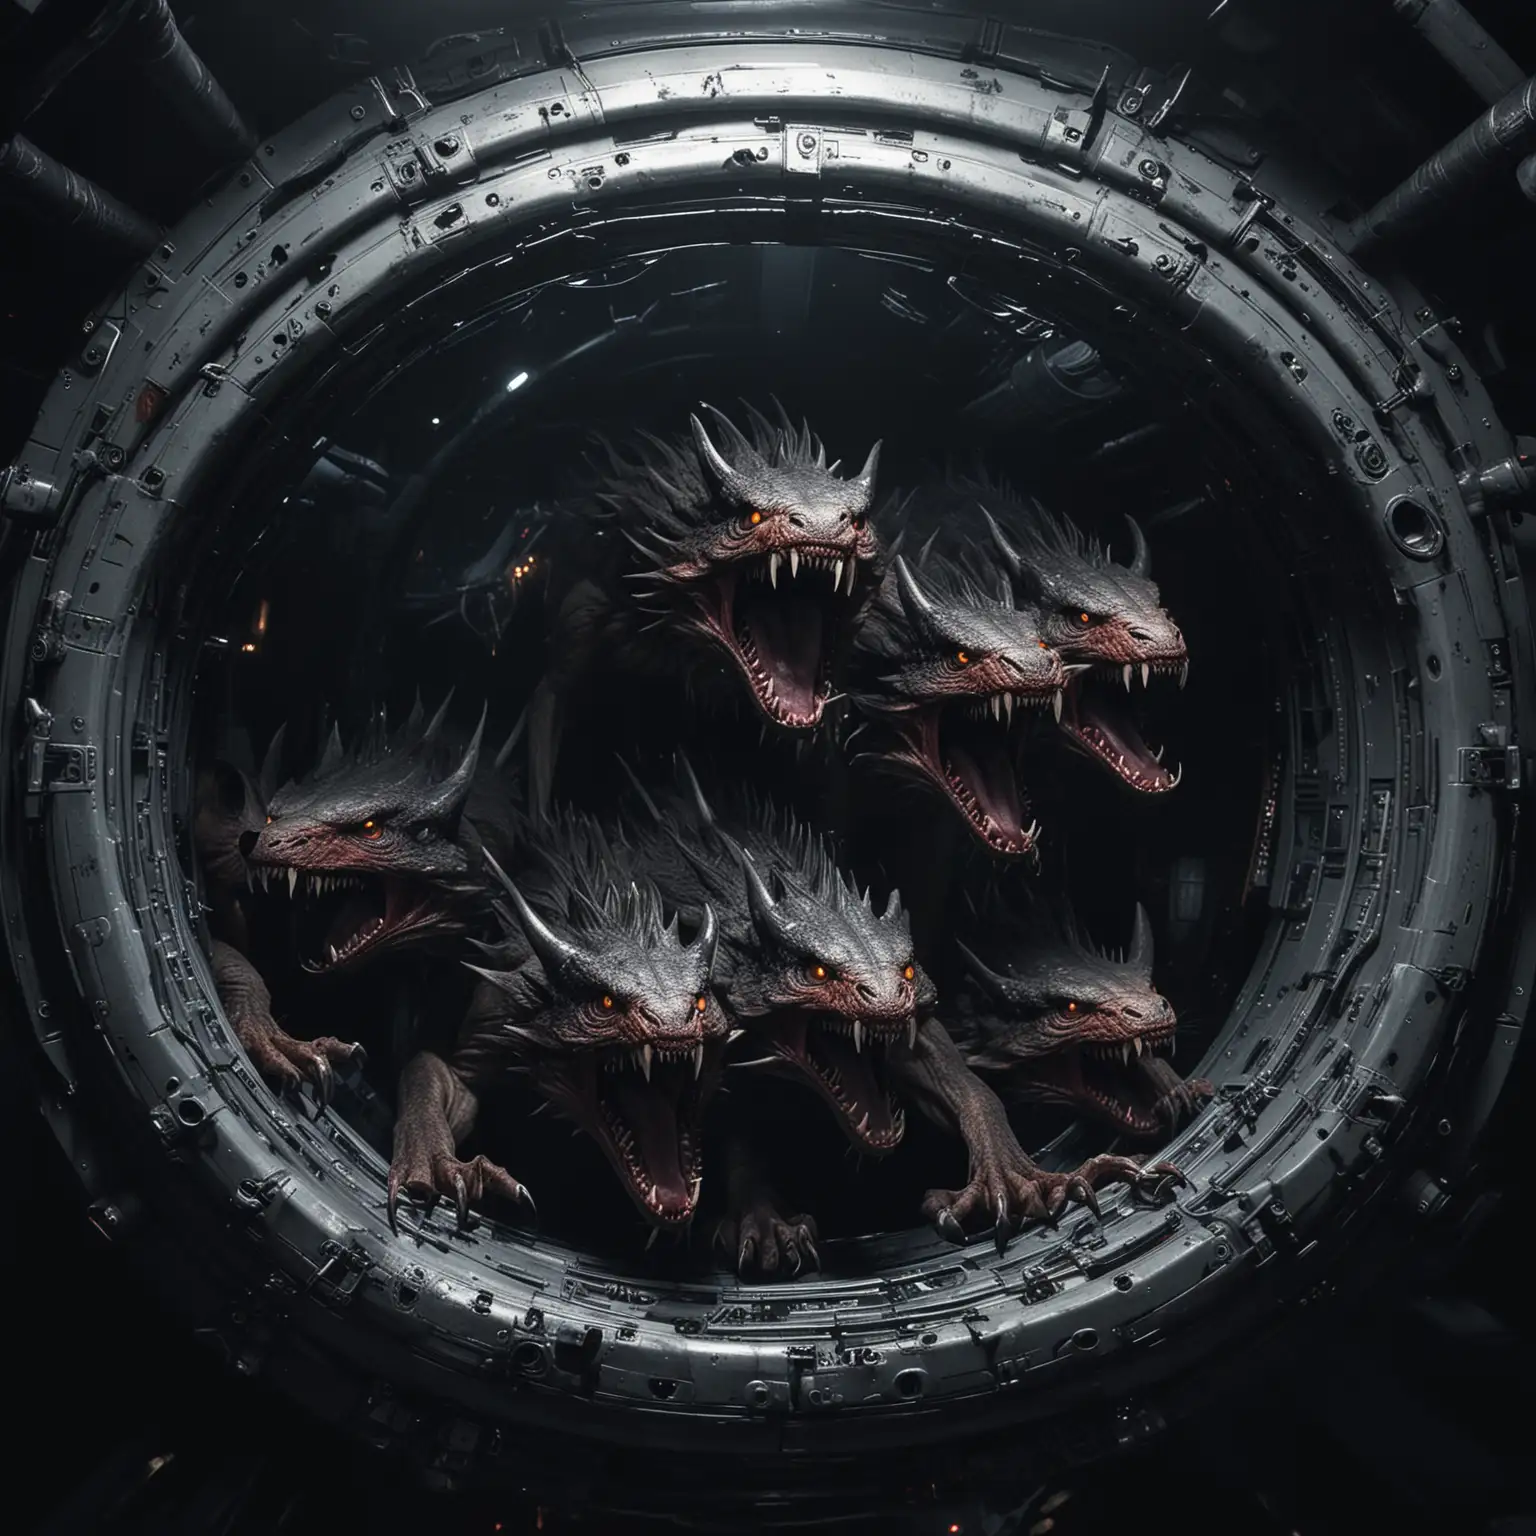 Sinister Alien Predators Lurking in Spaceship Shadows